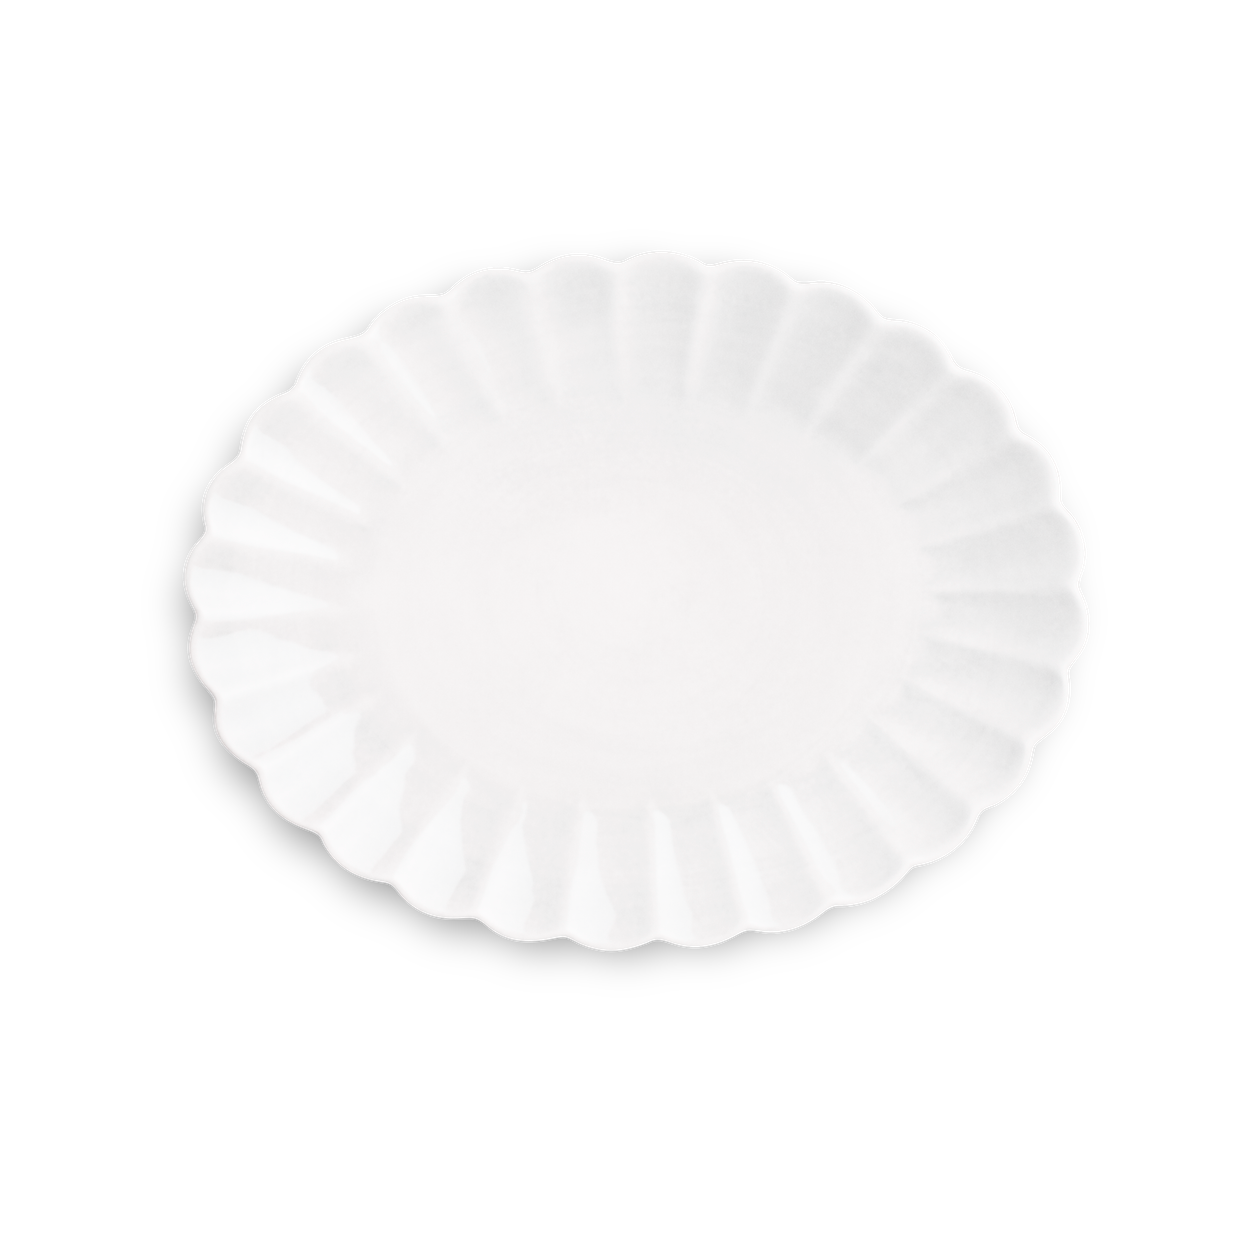 Oyster Platter